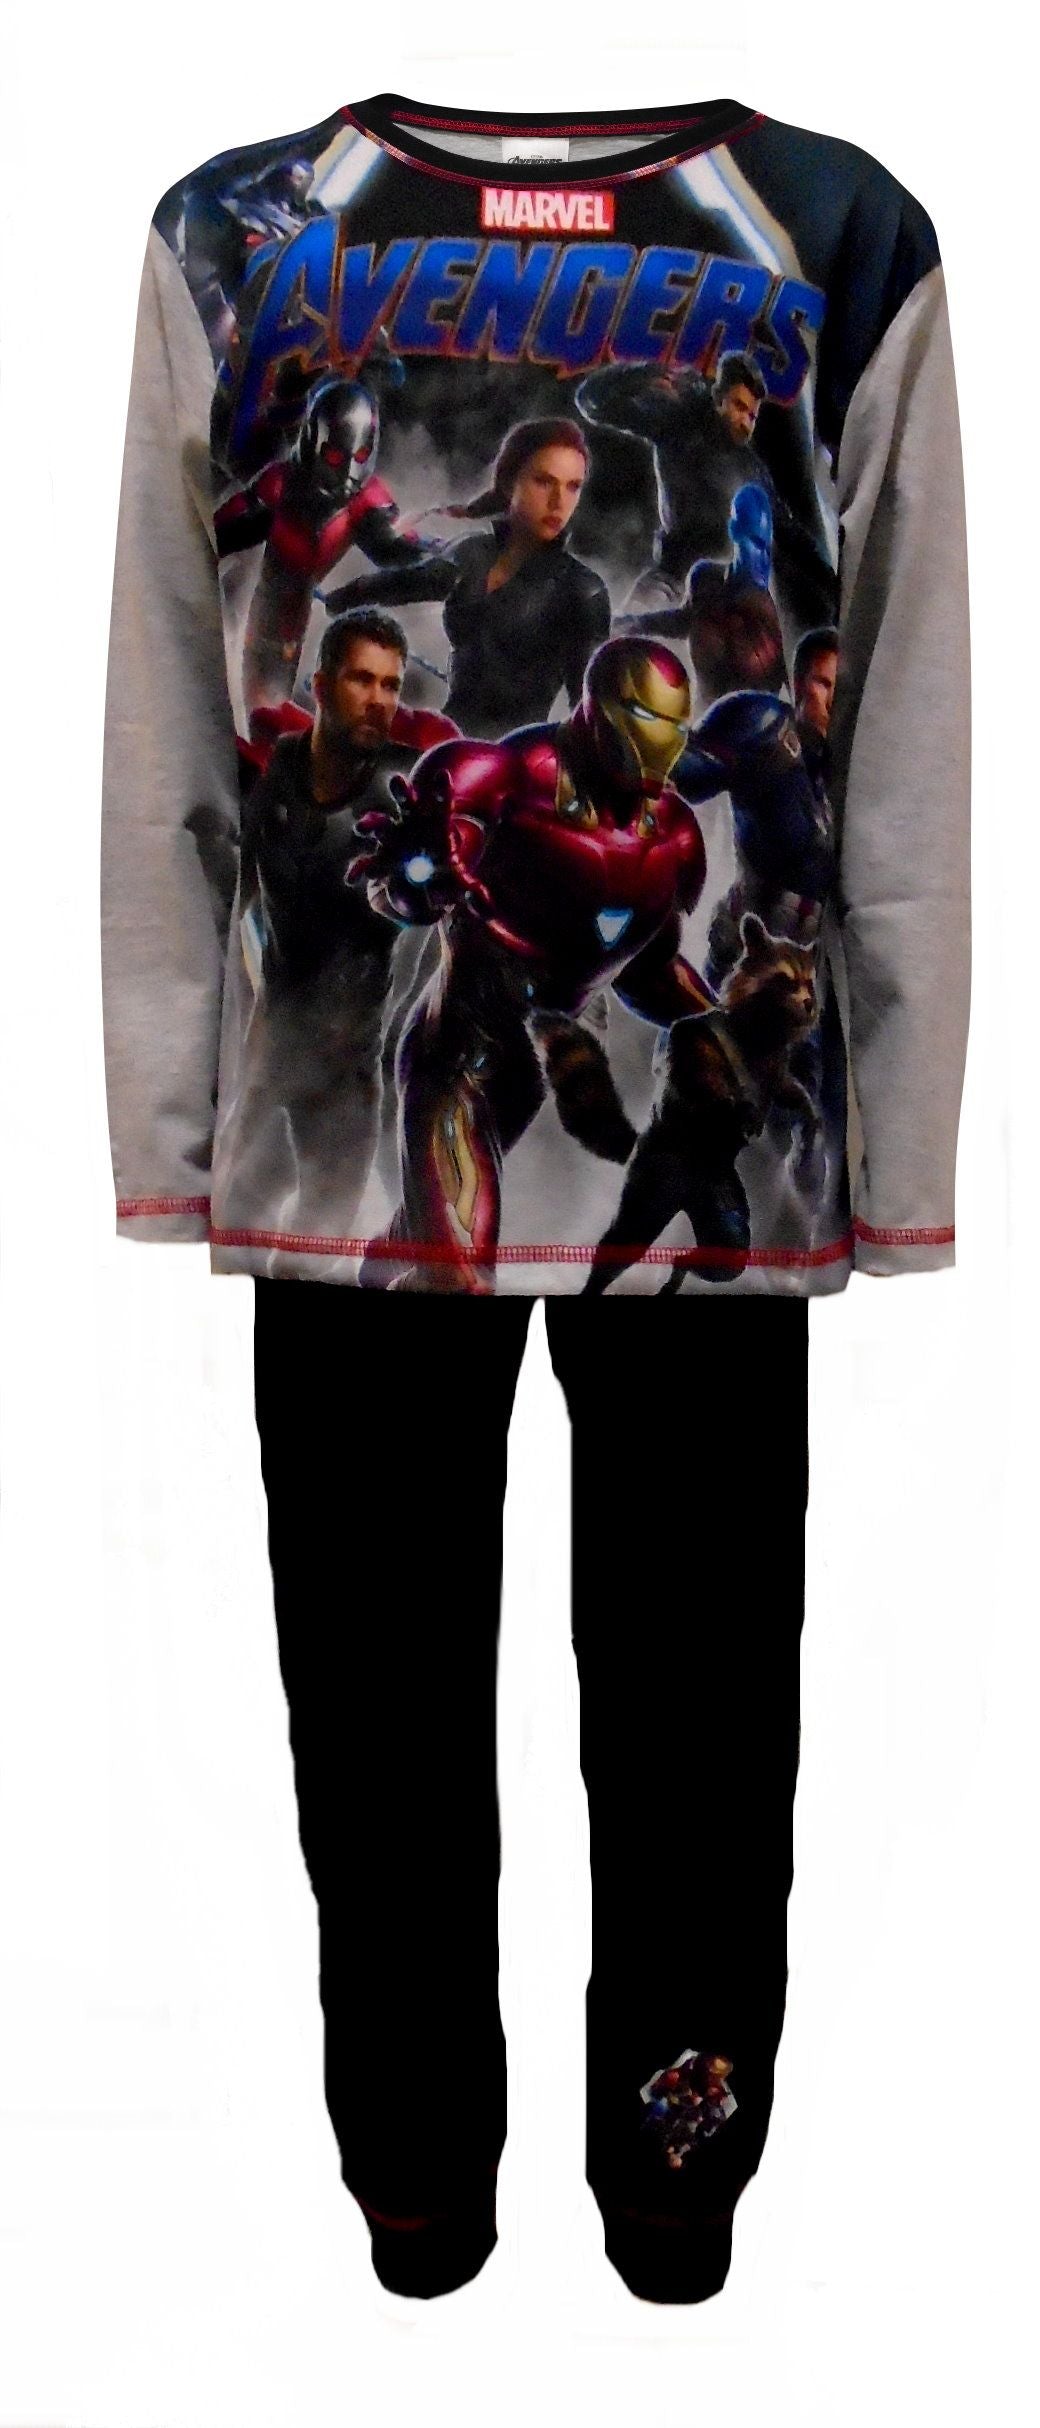 The Avengers "Superheroes" Boys Pyjamas